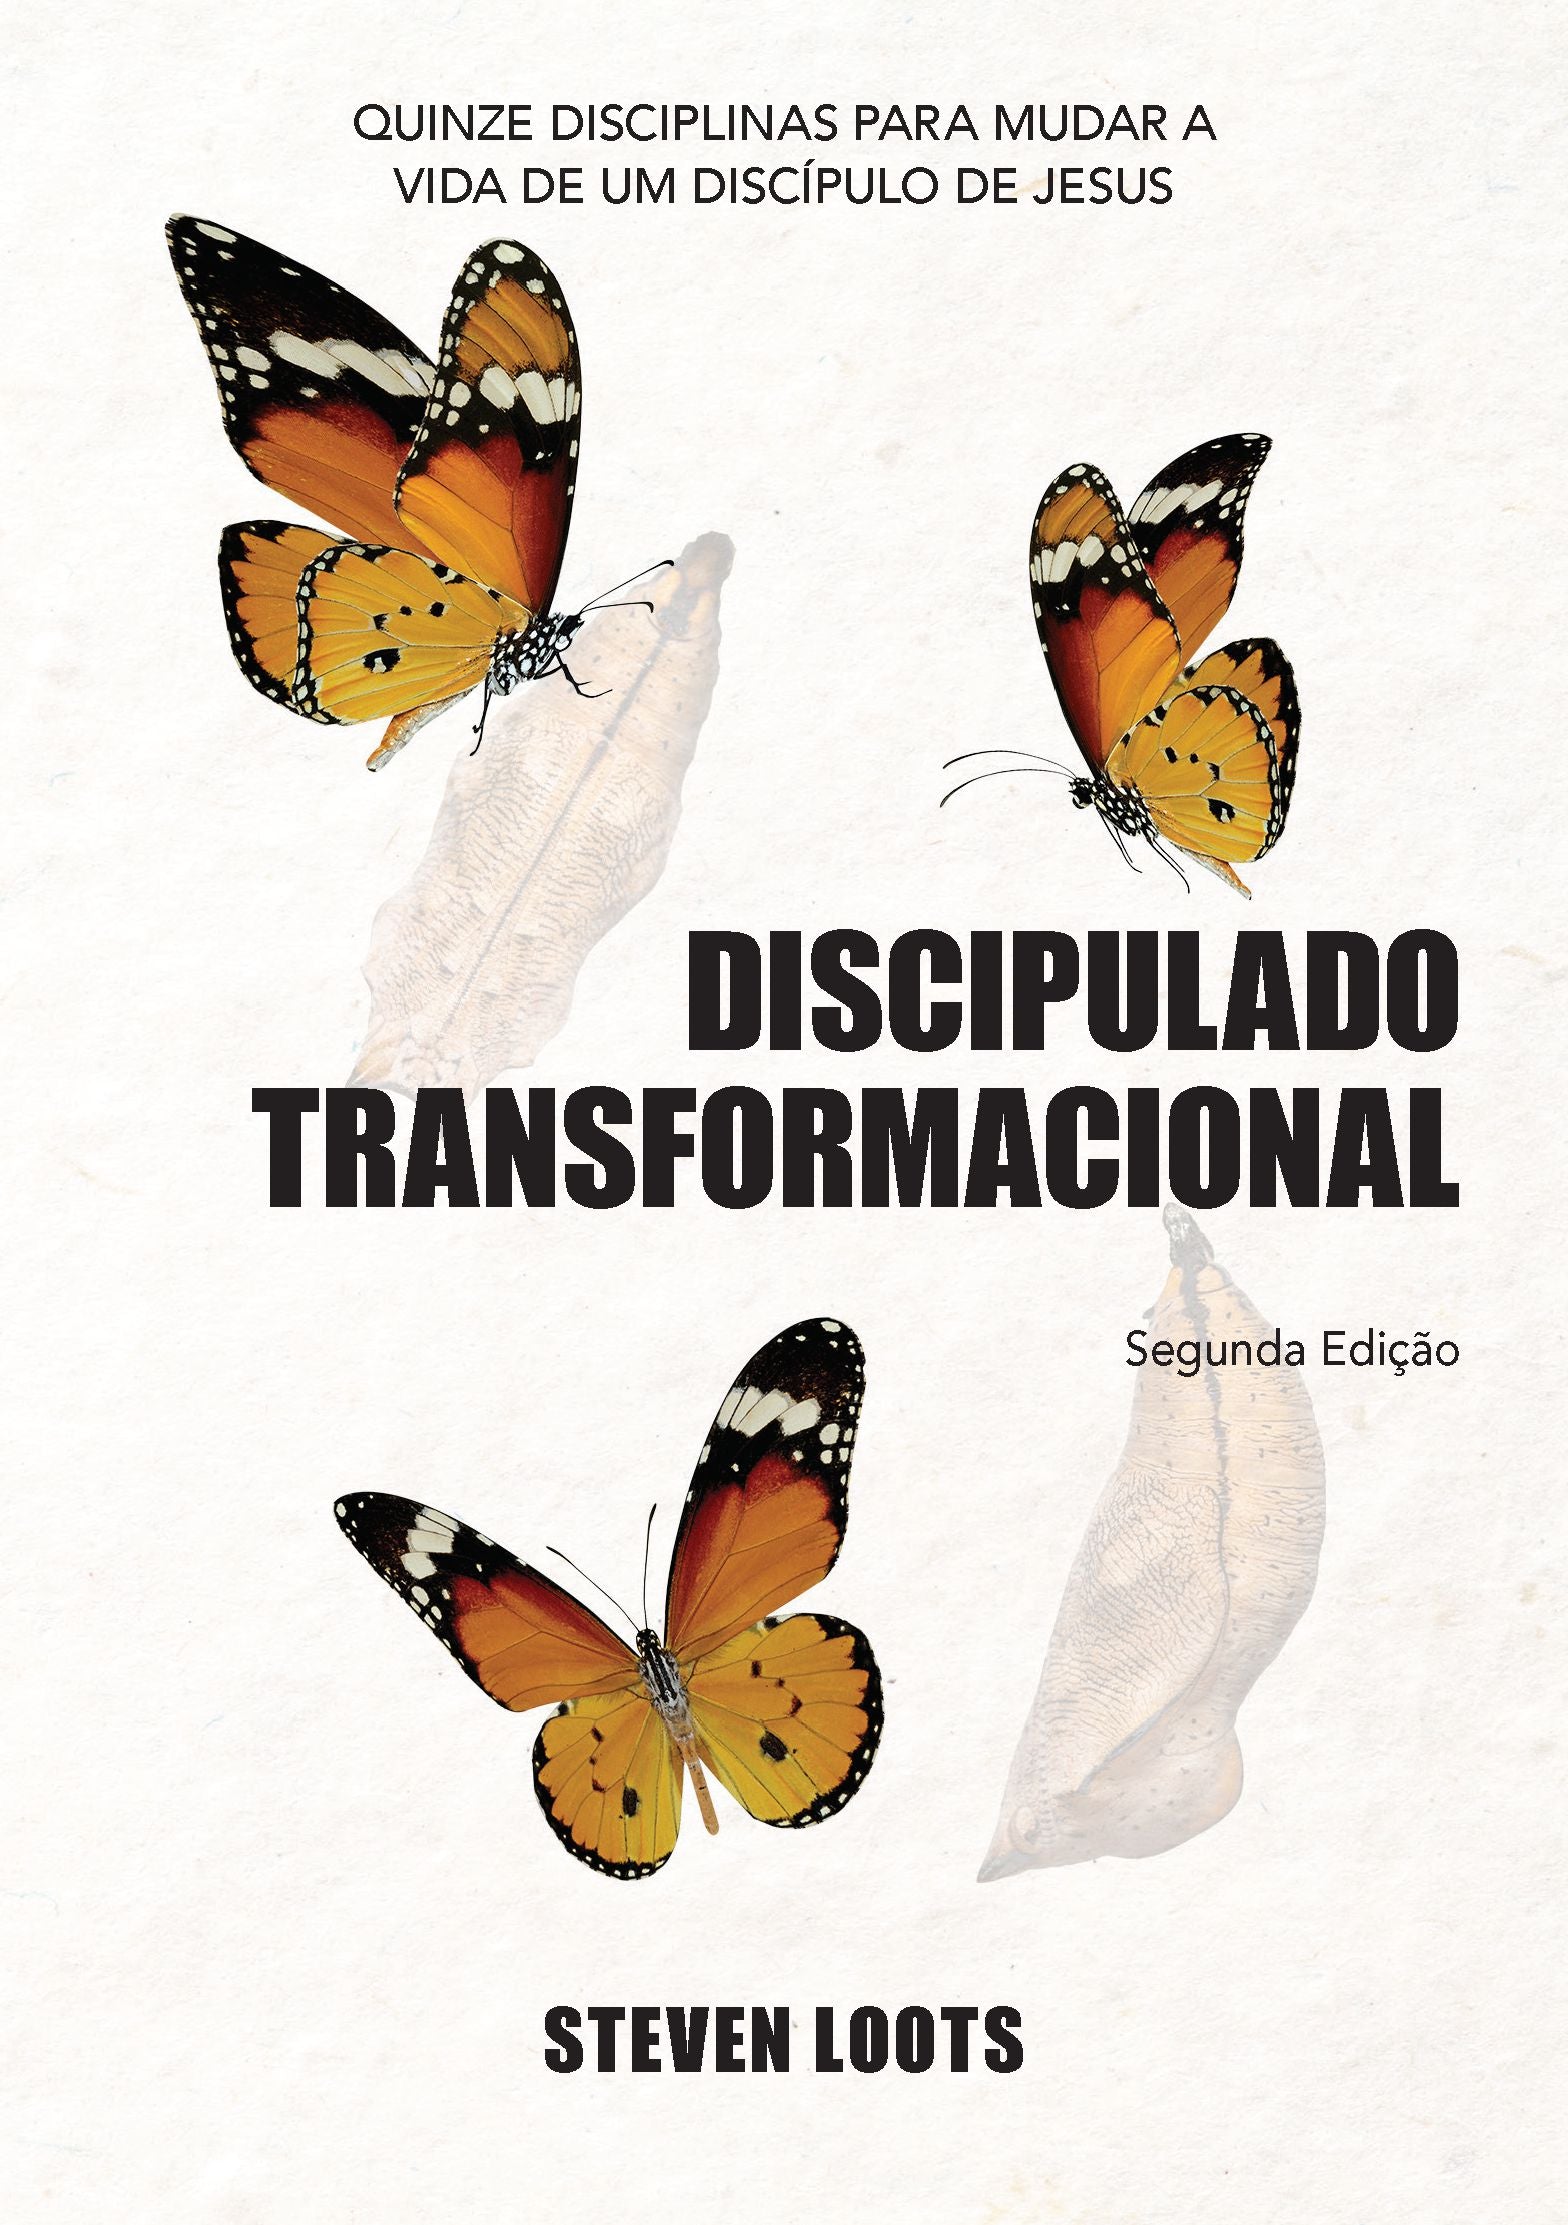 Discipulado Transformacional: Quinze Disciplinas para Mudar a Vida de um Discipulo de Jesus (Portuguese Edition)